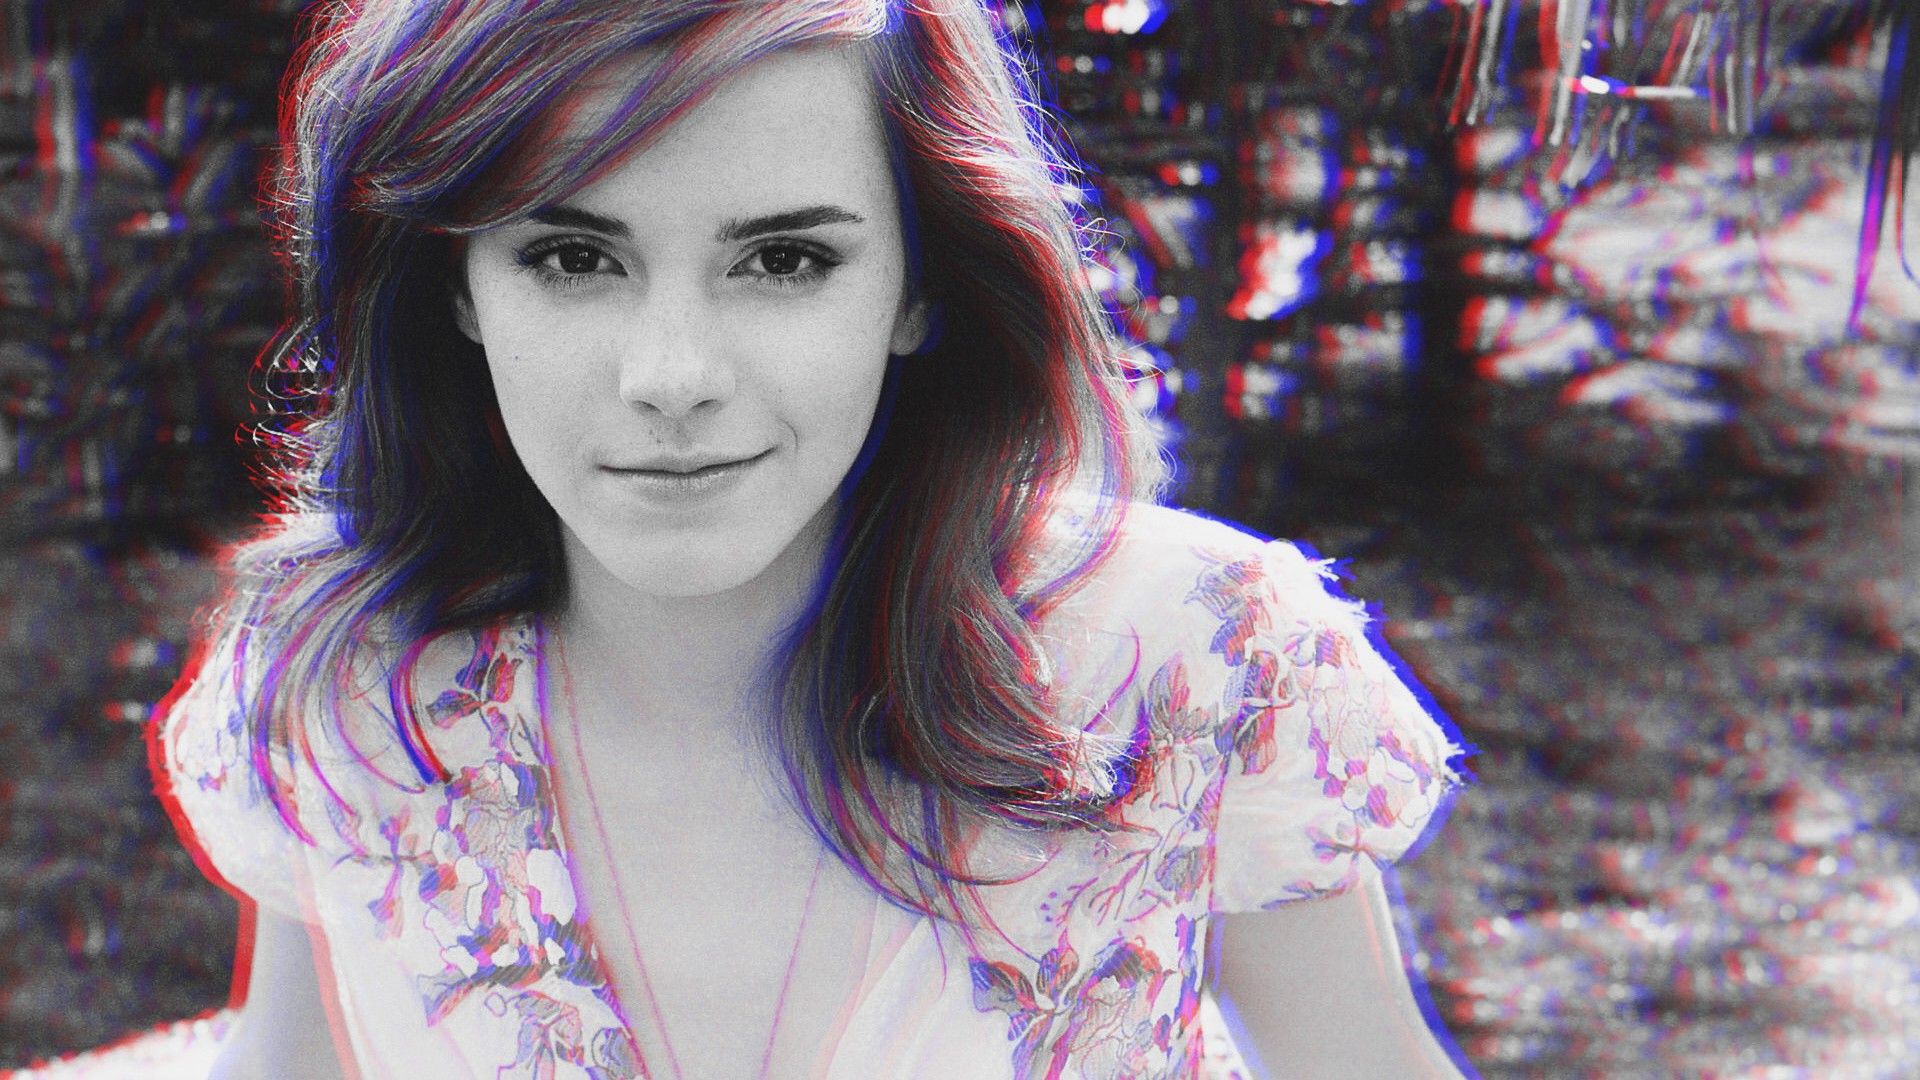 Emma Watson Anaglyph 3D Monochrome Actress Women Wallpaper:1920x1080